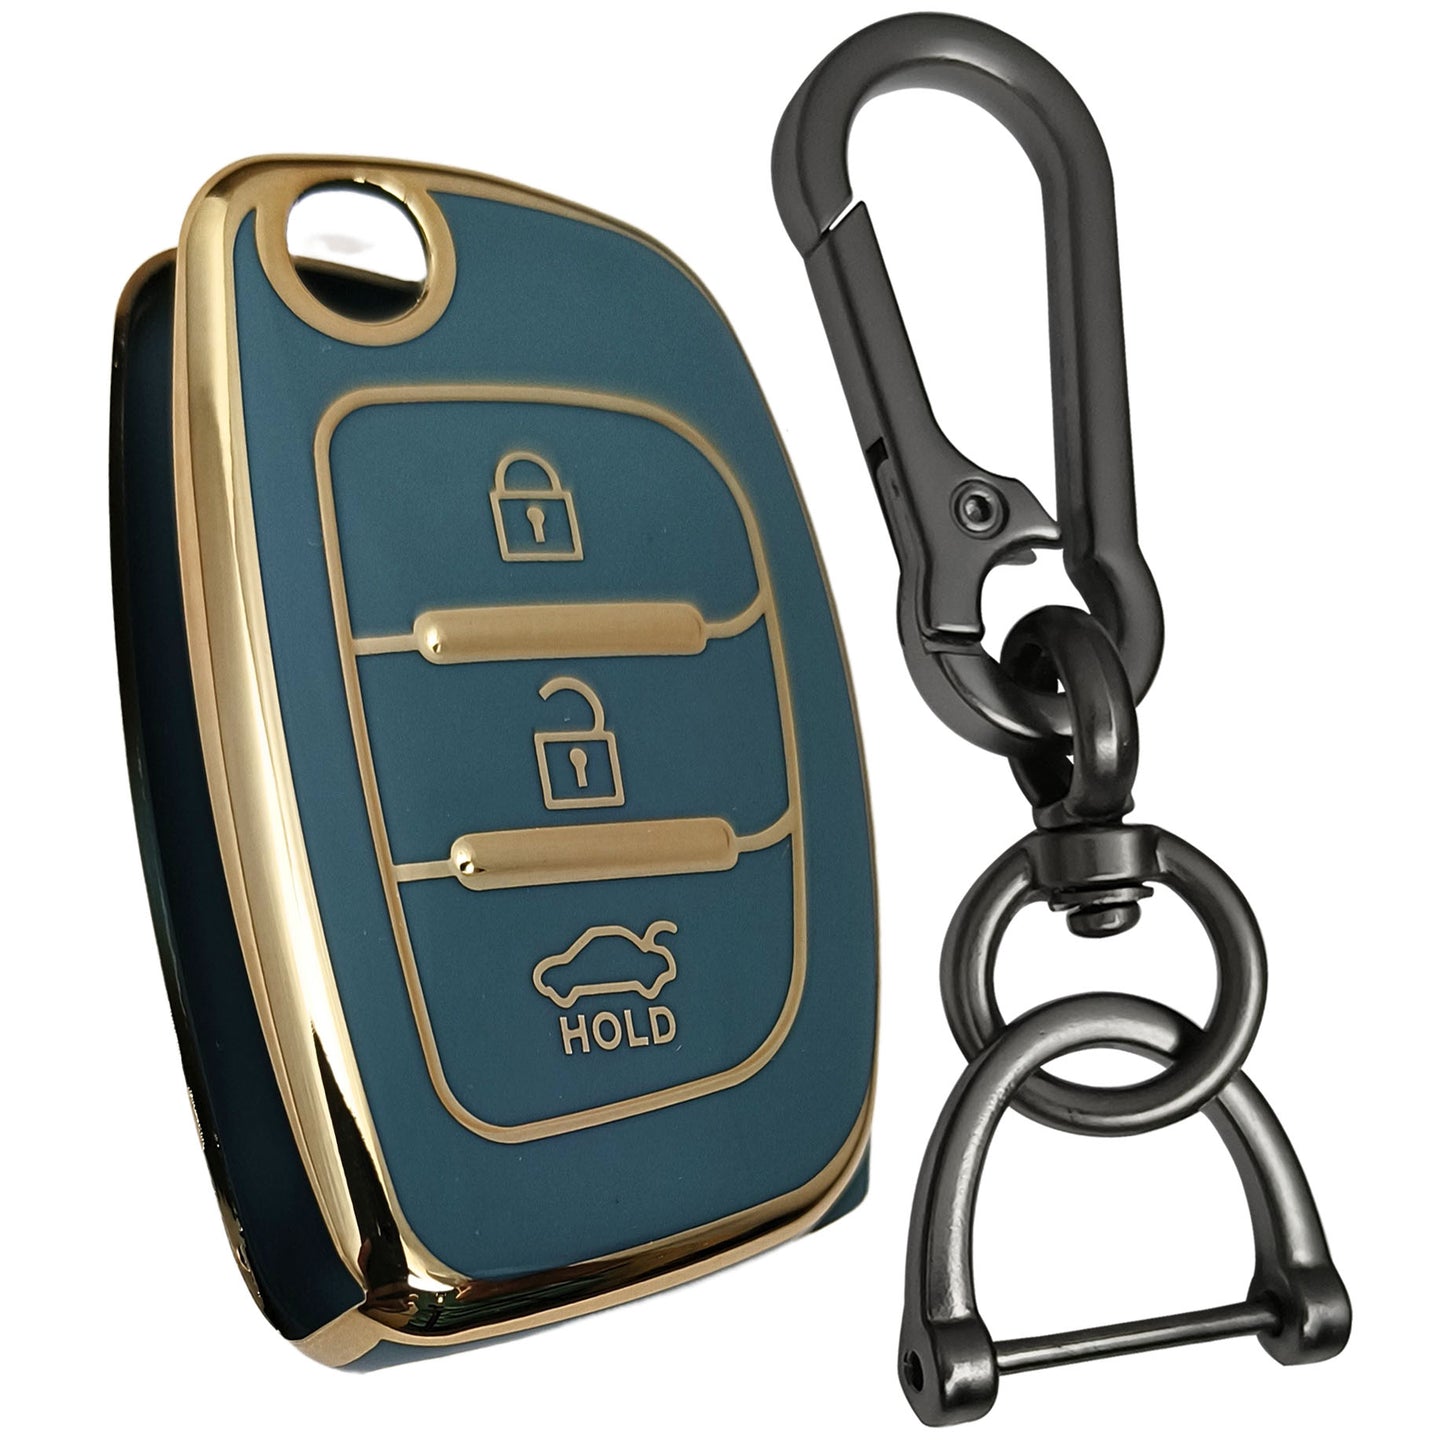 hyundai i20new 3b flip tpu blue key cover case keychain